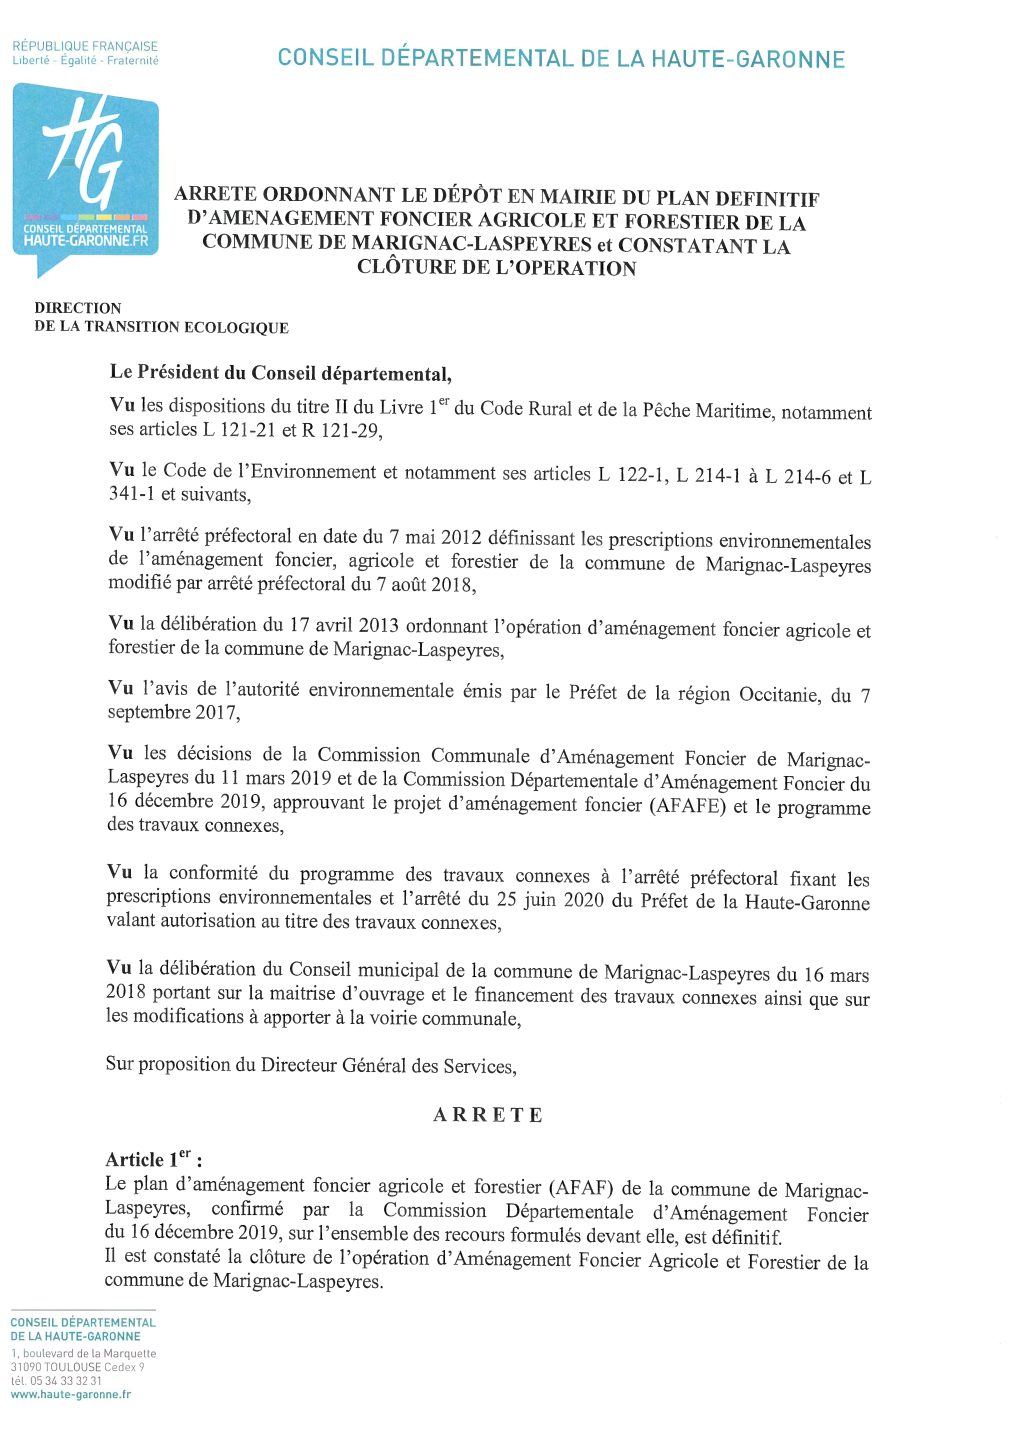 Conseil Departemental De La Haute-Garonne